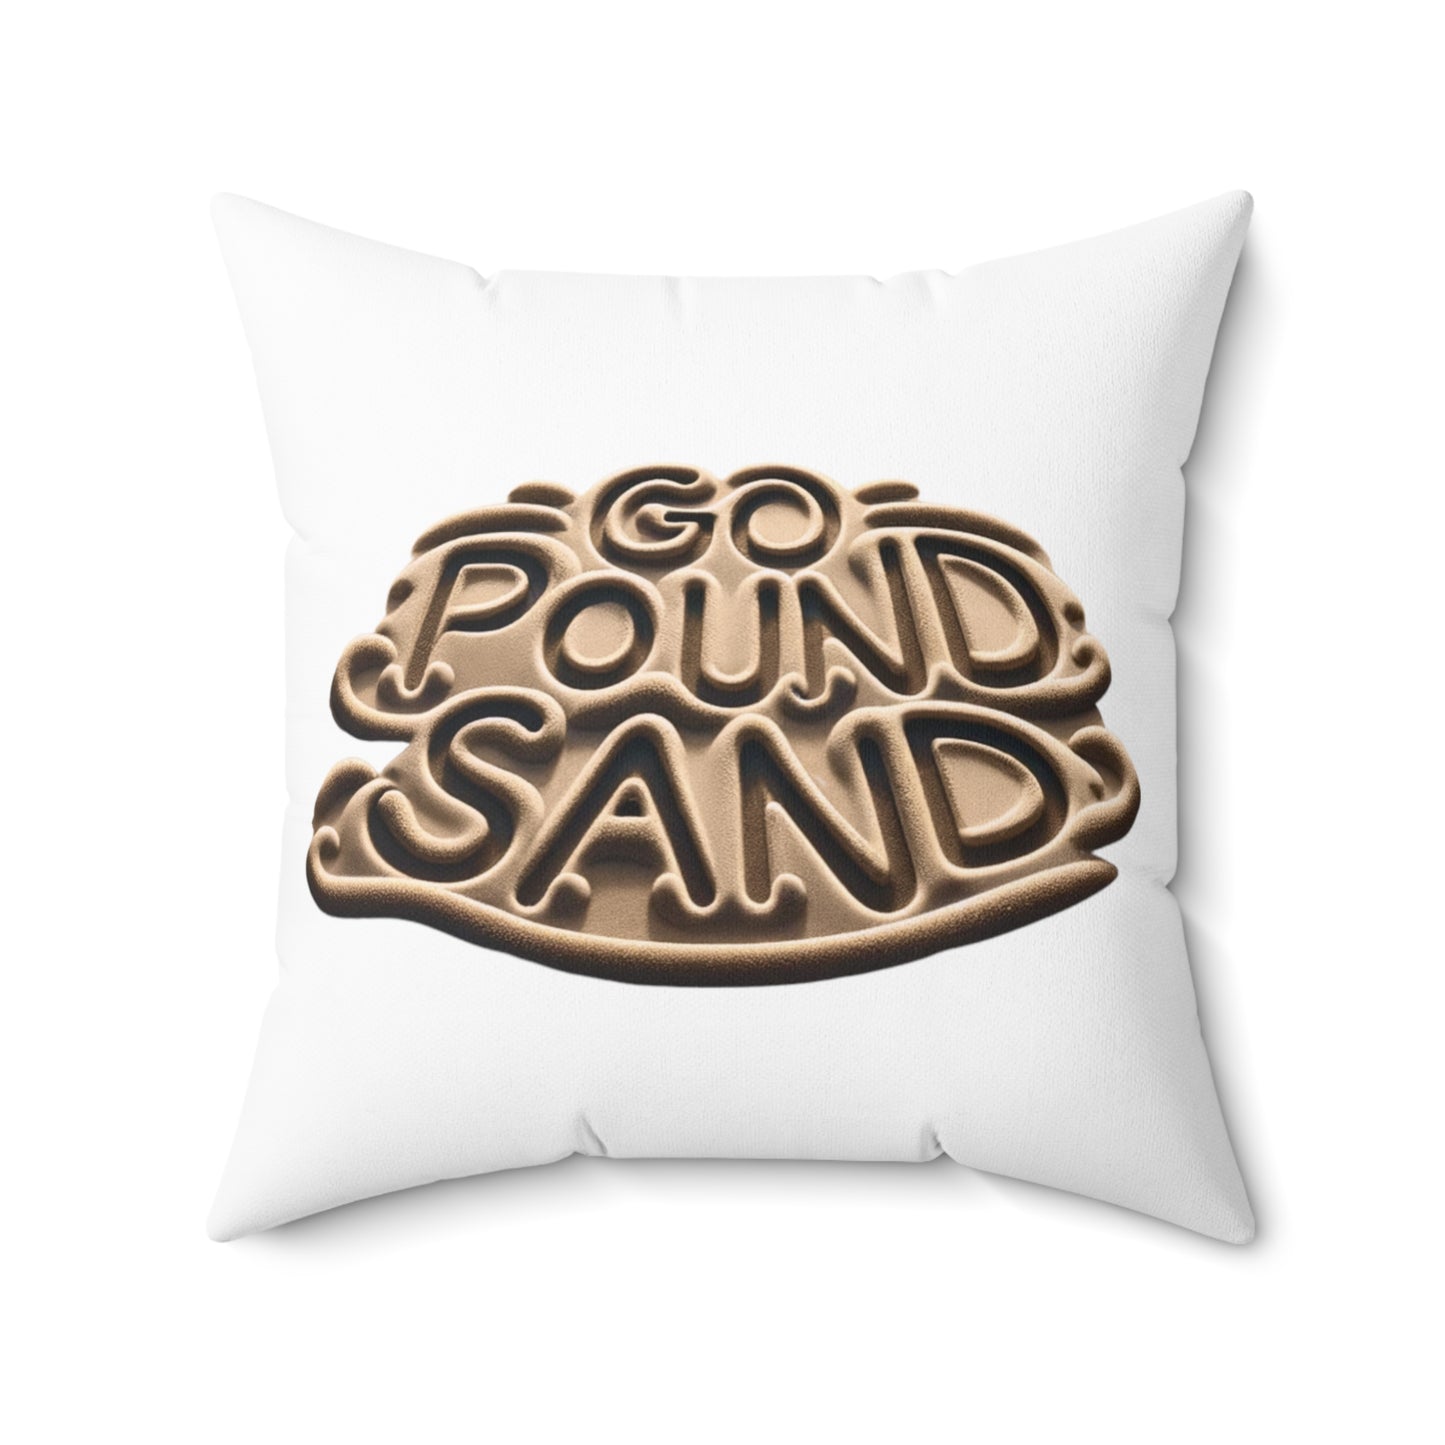 White Go Pound Sand Humorous Beach Decor Pillow - Comedic Coastal Home Accent, bed14x14 Indoor Cushion, white neutral.